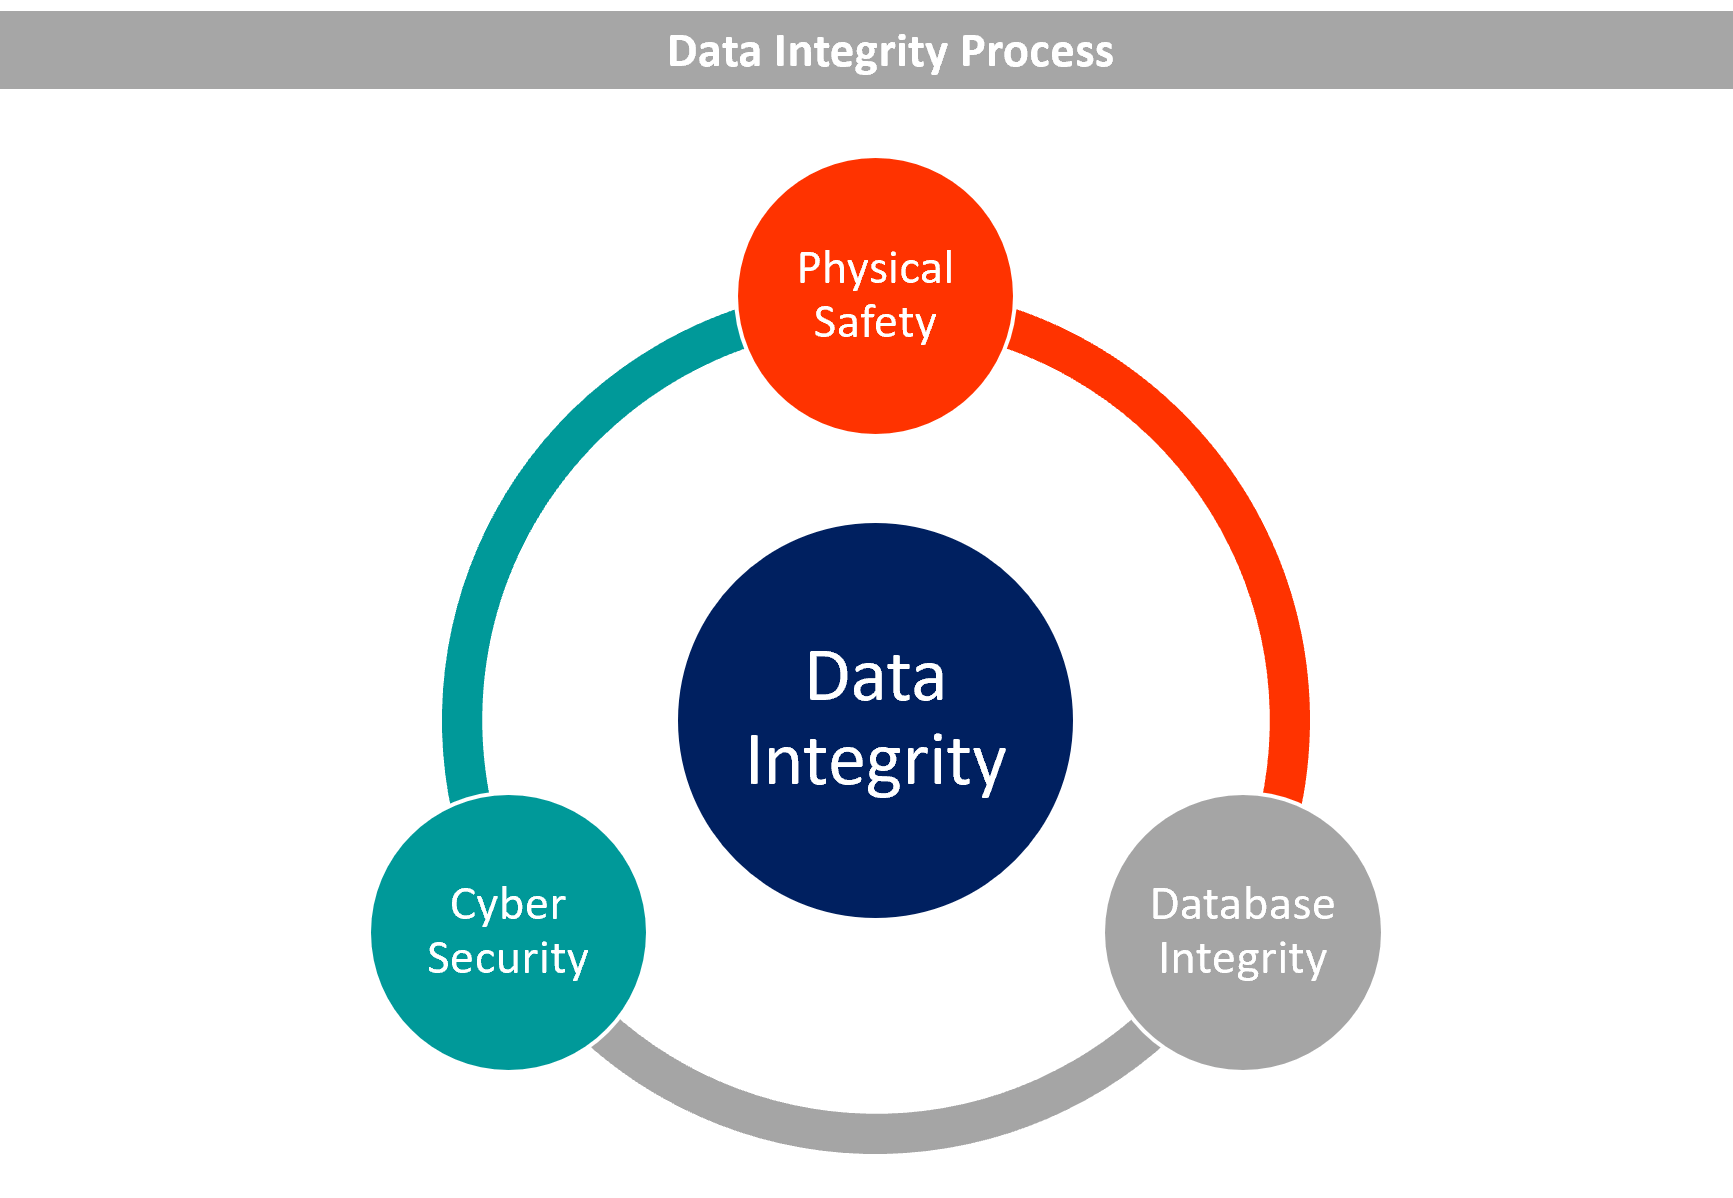 Data Integrity: Meeting the Regular Expectation